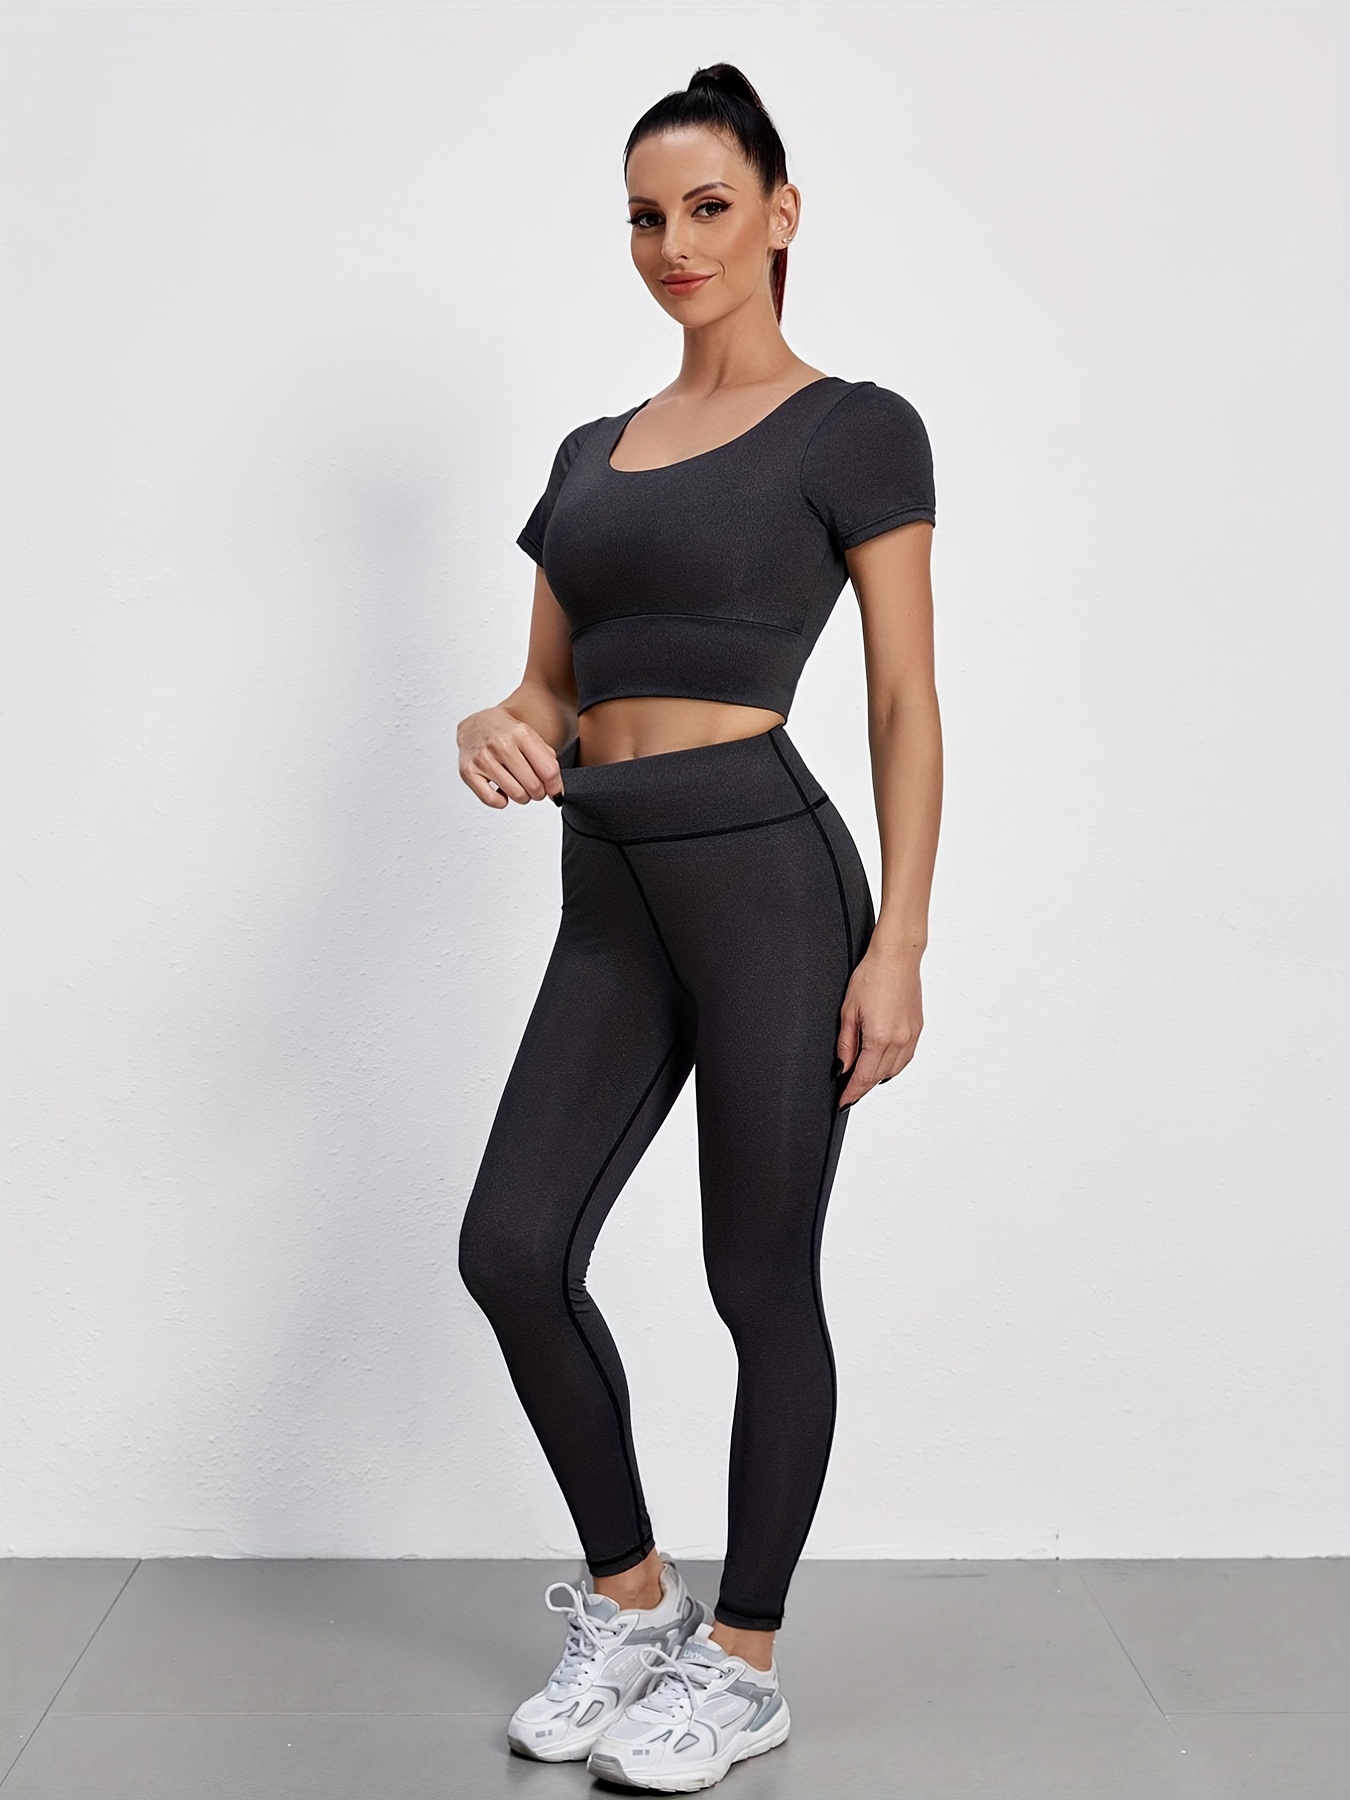 Women's charcoal grey active high rise capri leggings workout